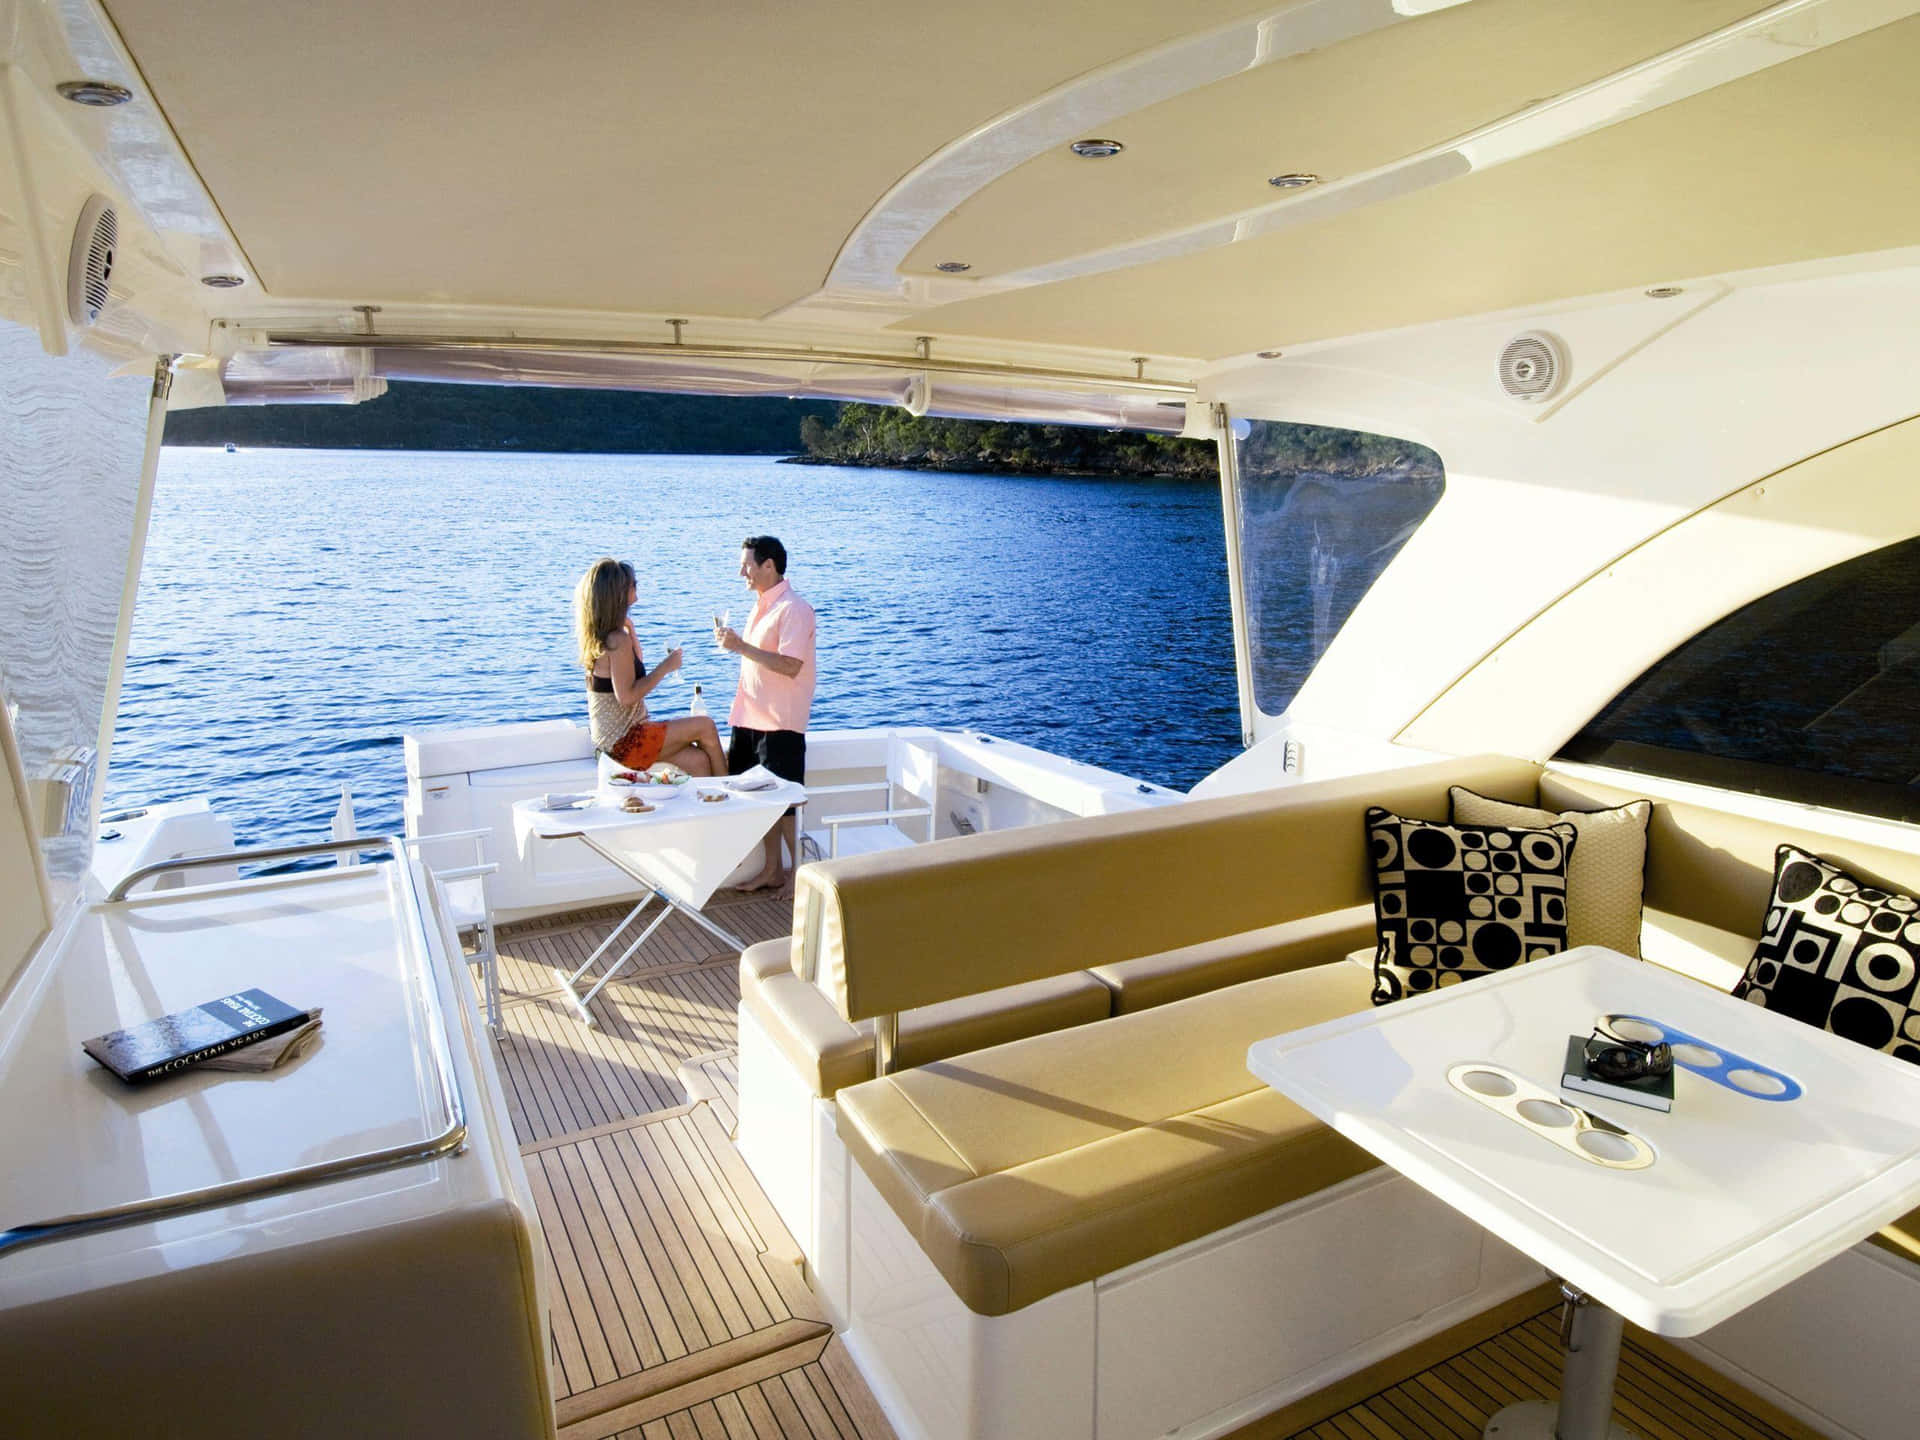 A Luxurious Yacht in a Serene Coastline